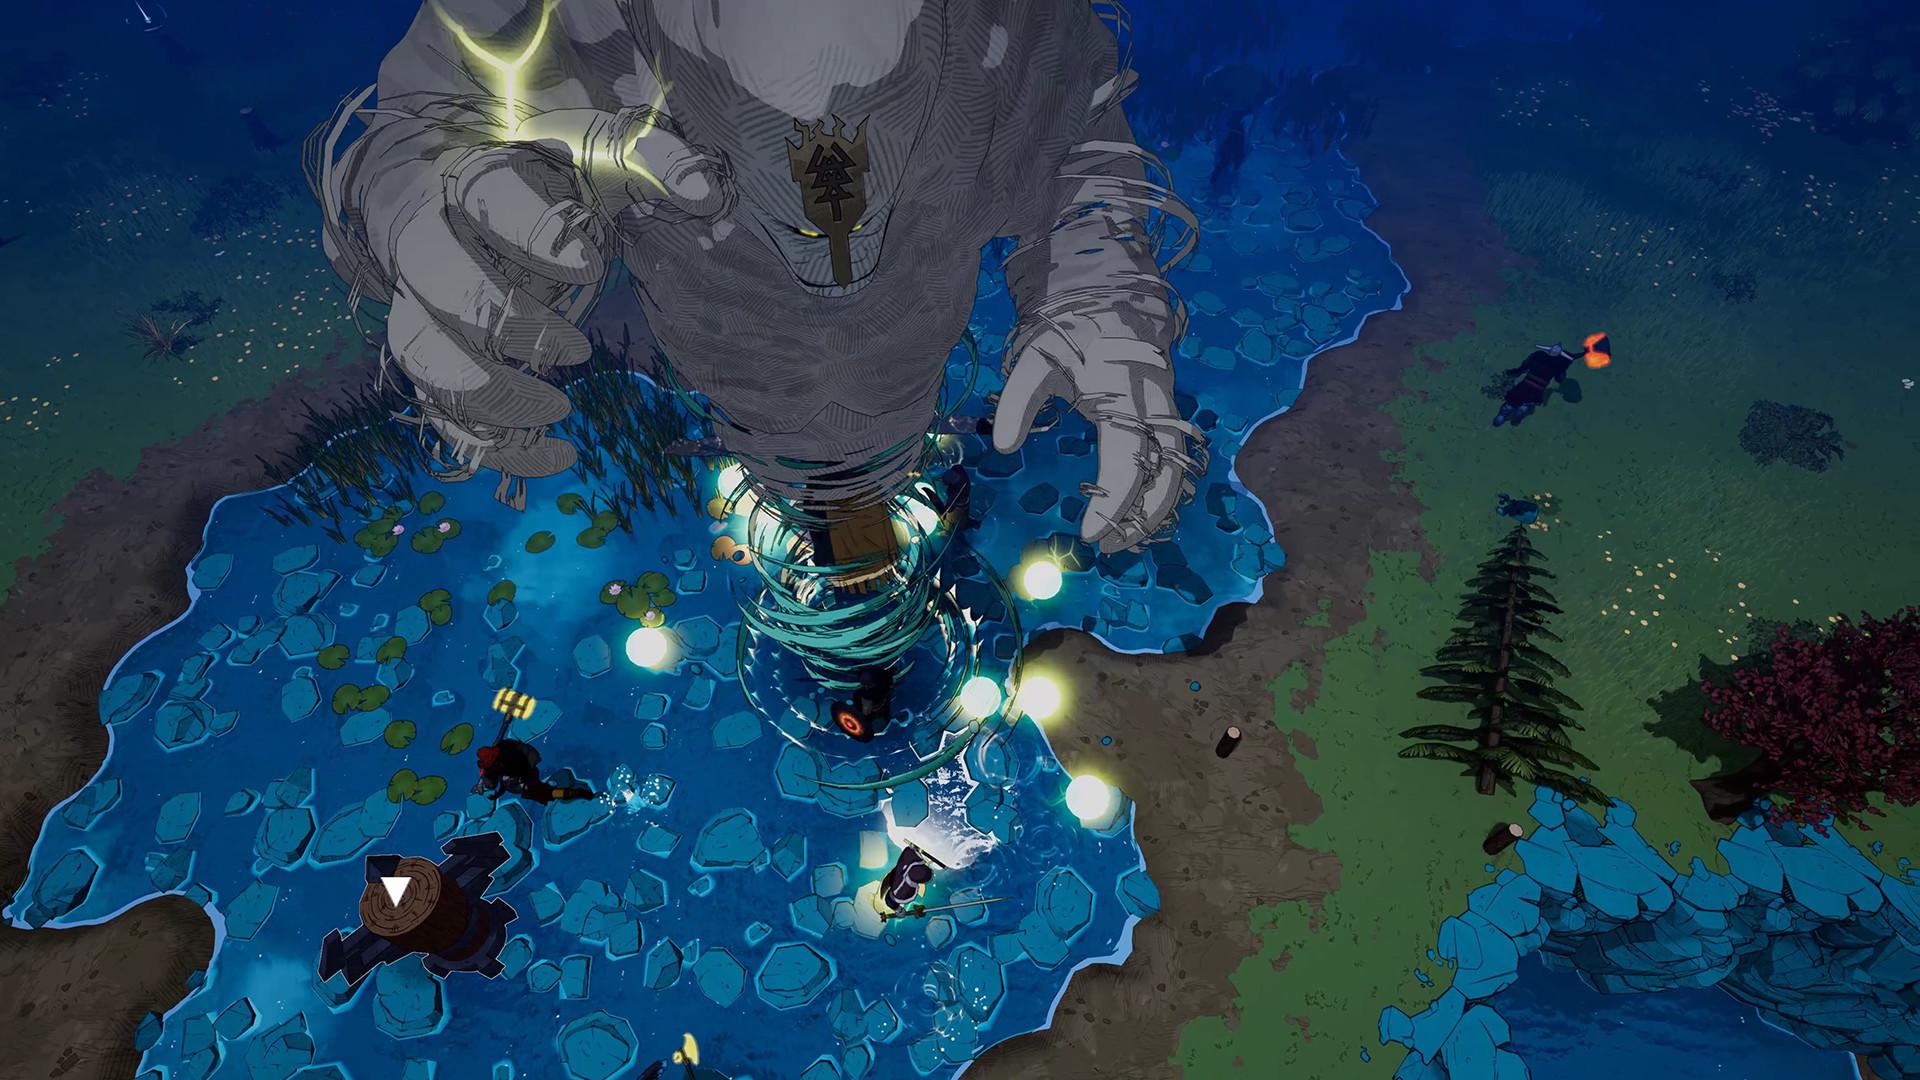 Screenshot №3 from game Tribes of Midgard - Open Beta